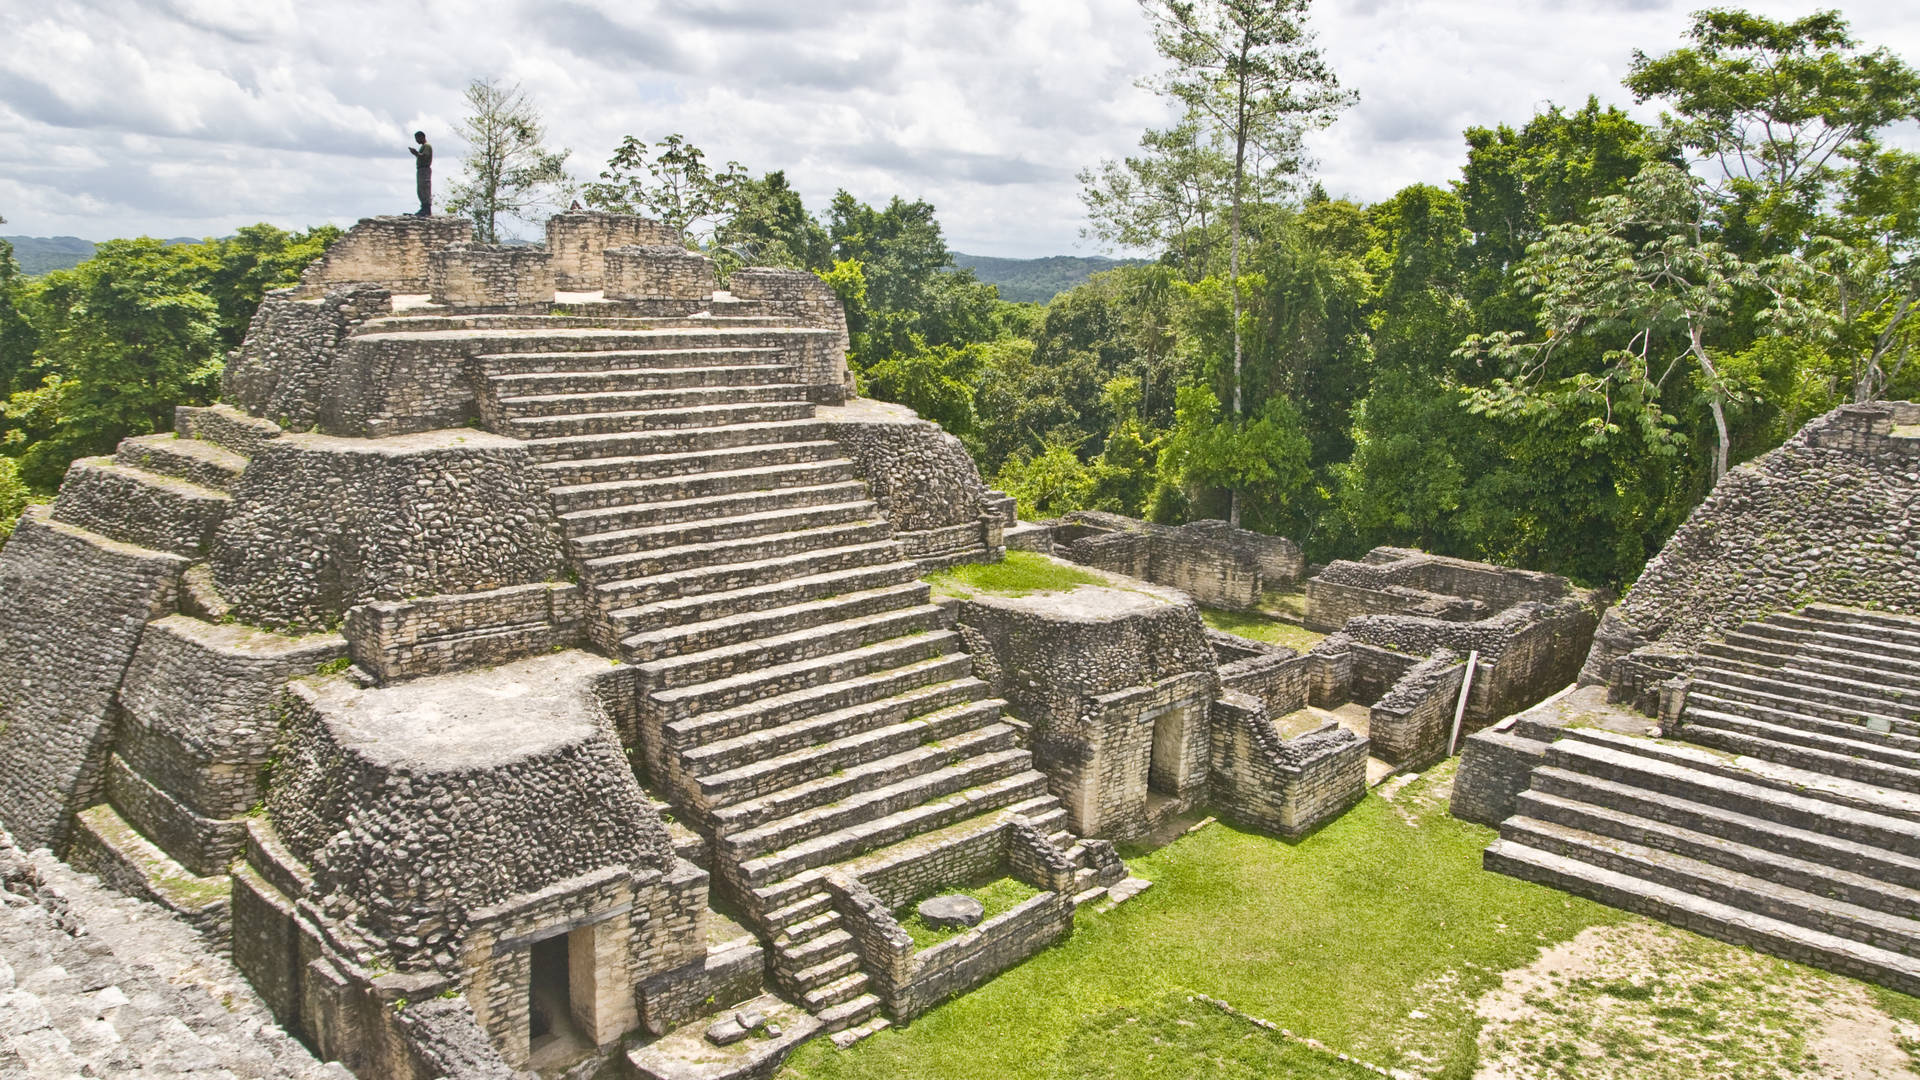 Mayan ruins exploration, Caribbean island hopping, Cultural immersion, Unforgettable memories, 1920x1080 Full HD Desktop